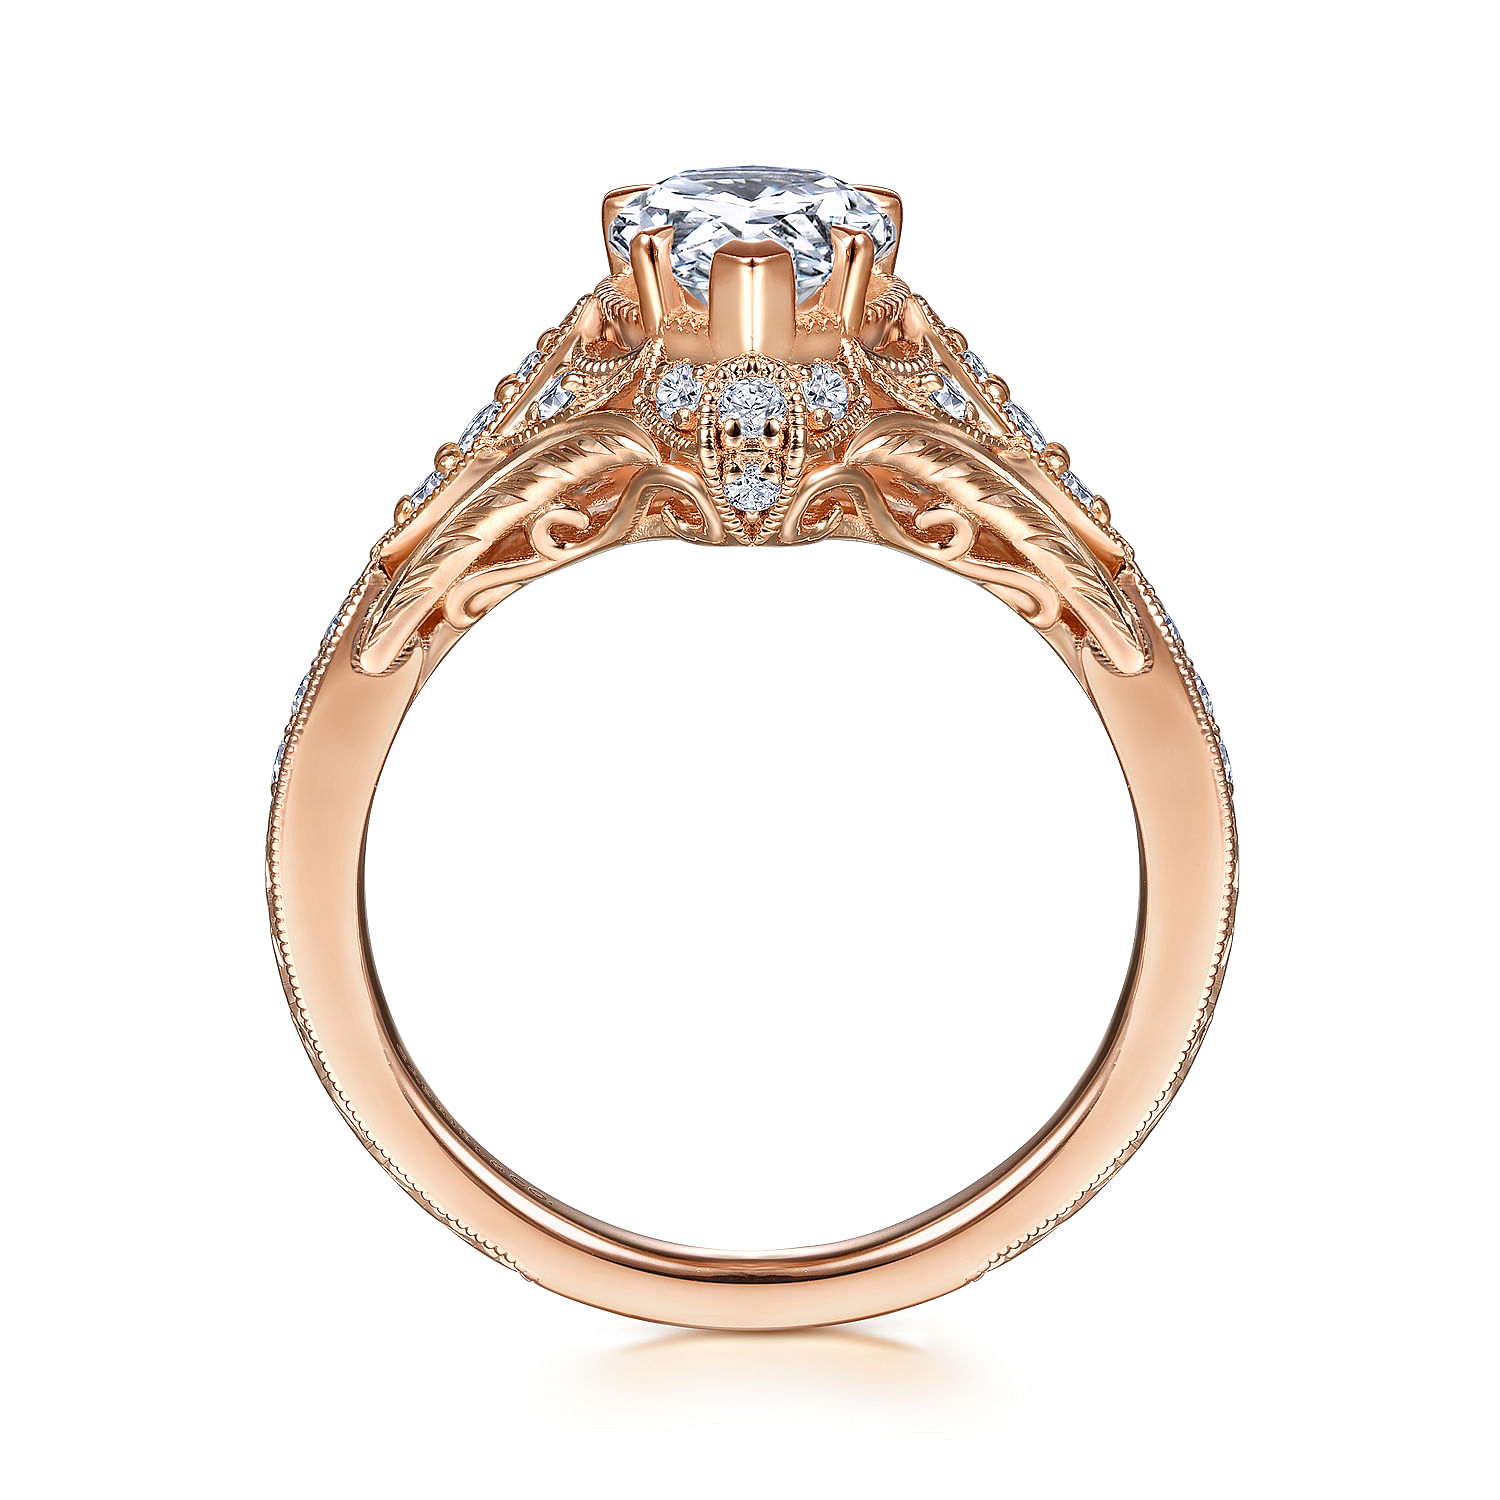 Unique 14K Rose Gold Vintage Inspired Pear Shape Diamond Halo Engagement Ring